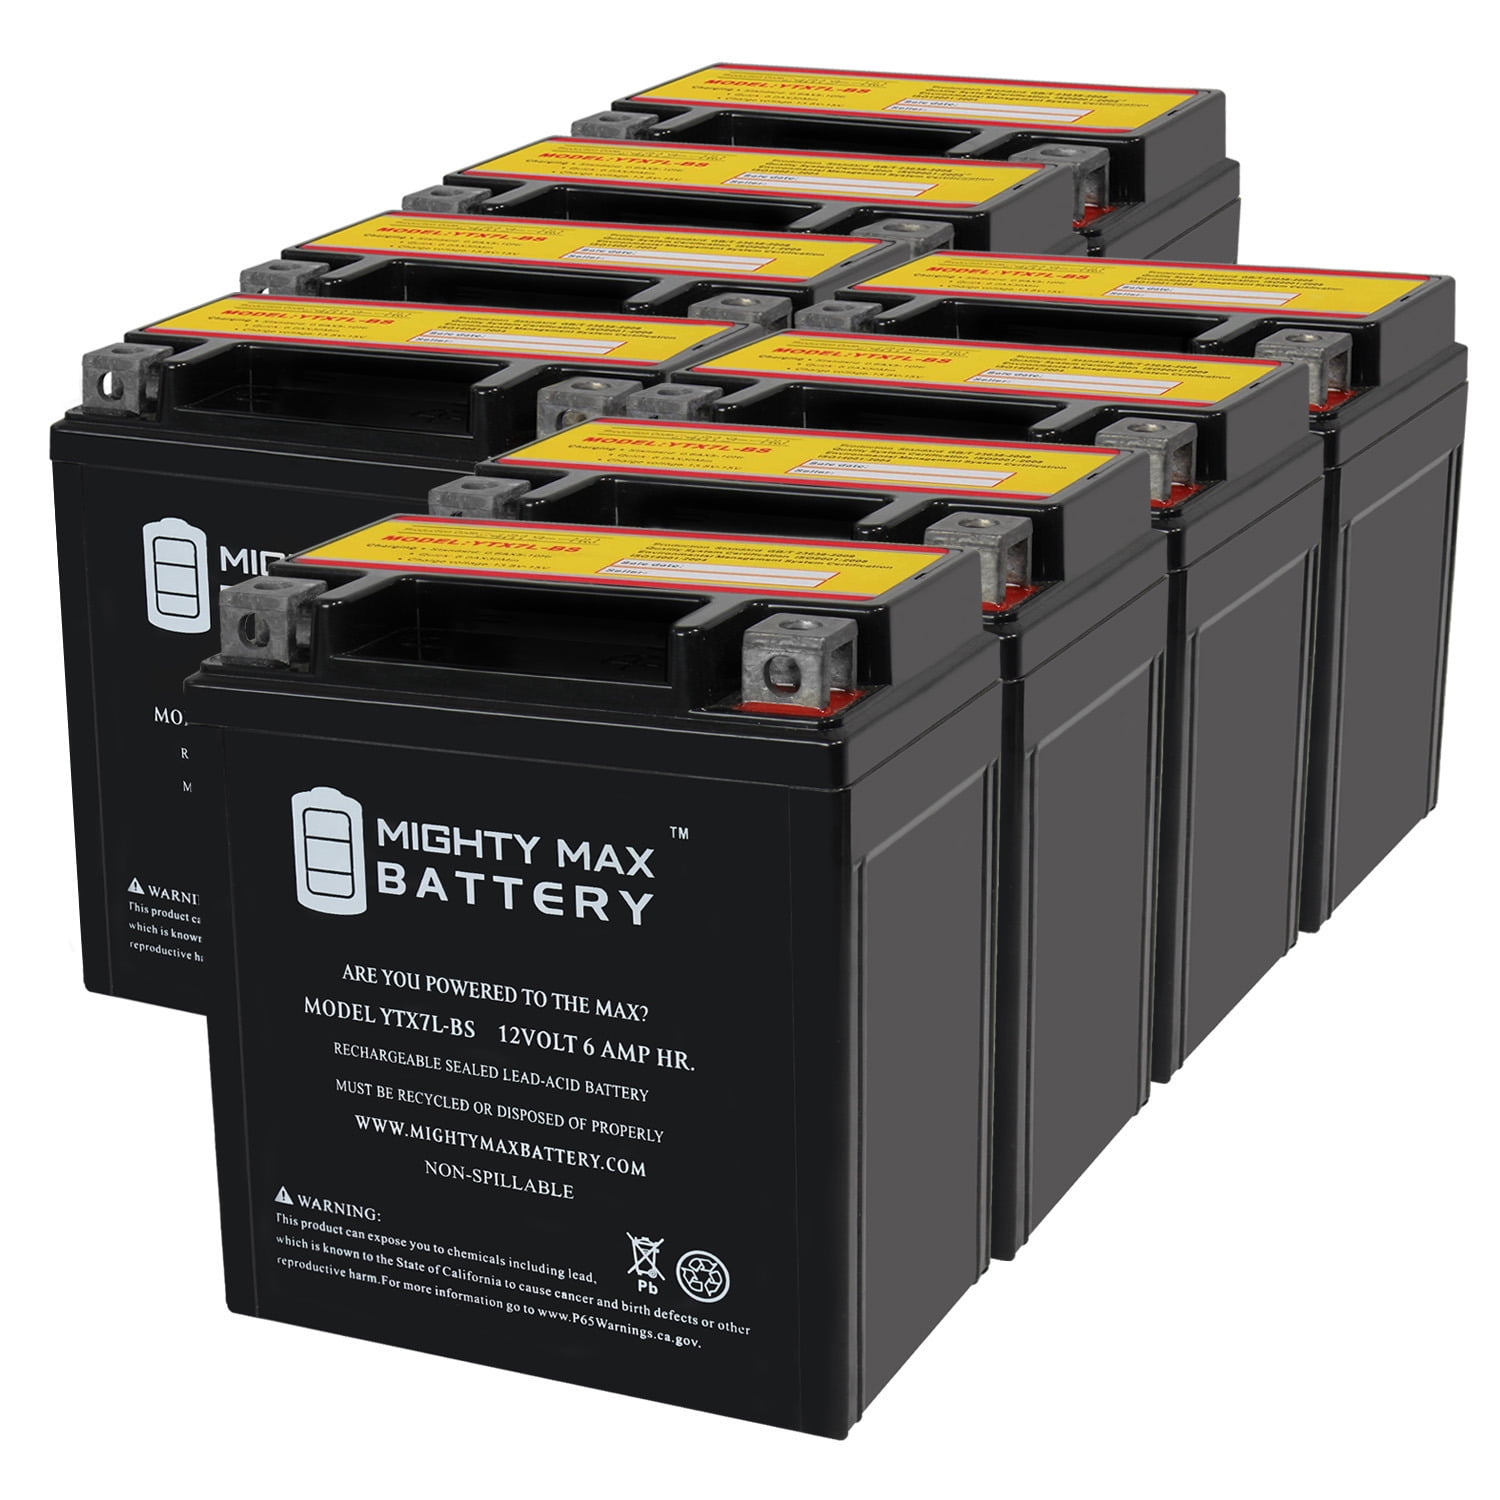 Batterie BOSCH YTX7L 4 YTX7L BSB4L B 12V 6AH 50 A complète avec